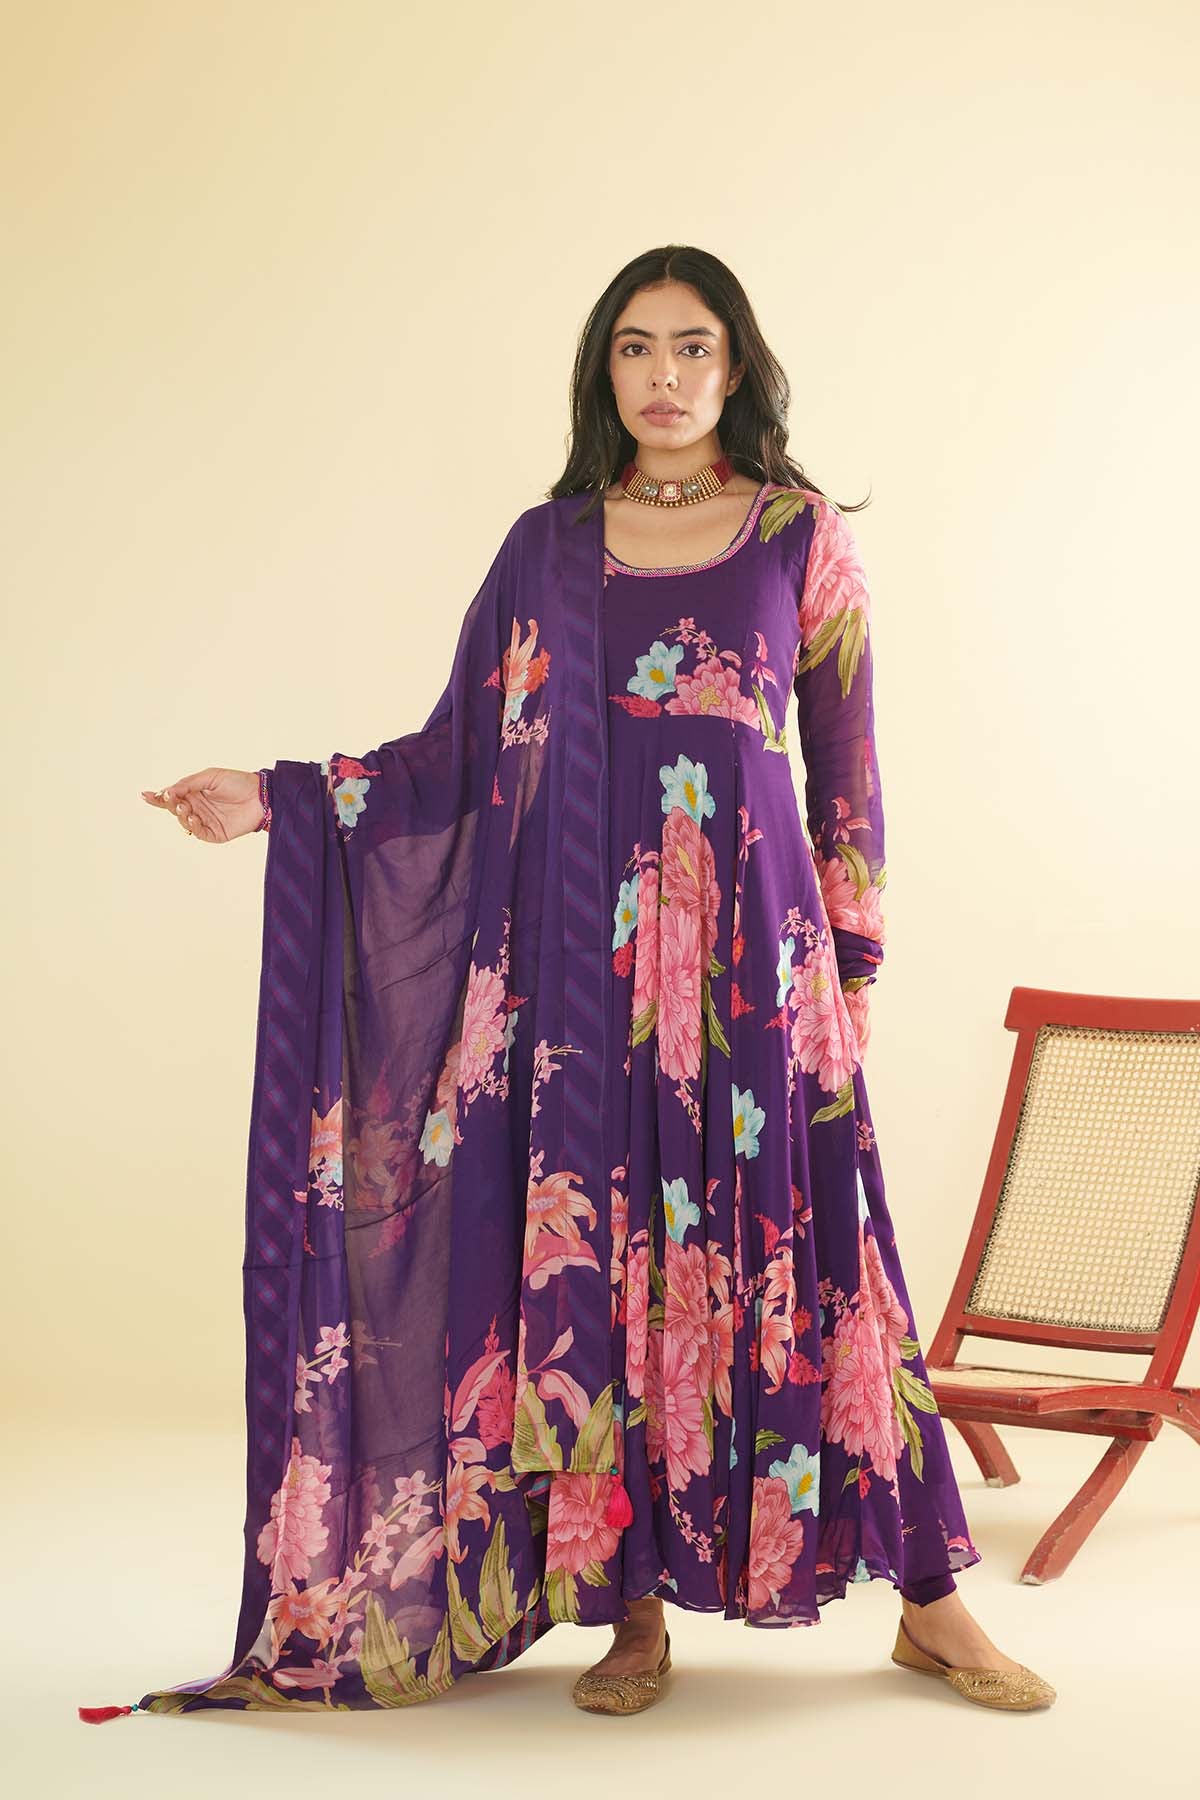 Floral Fiesta Purple printed Anarkali with Chooridar and Dupatta- Set of 3